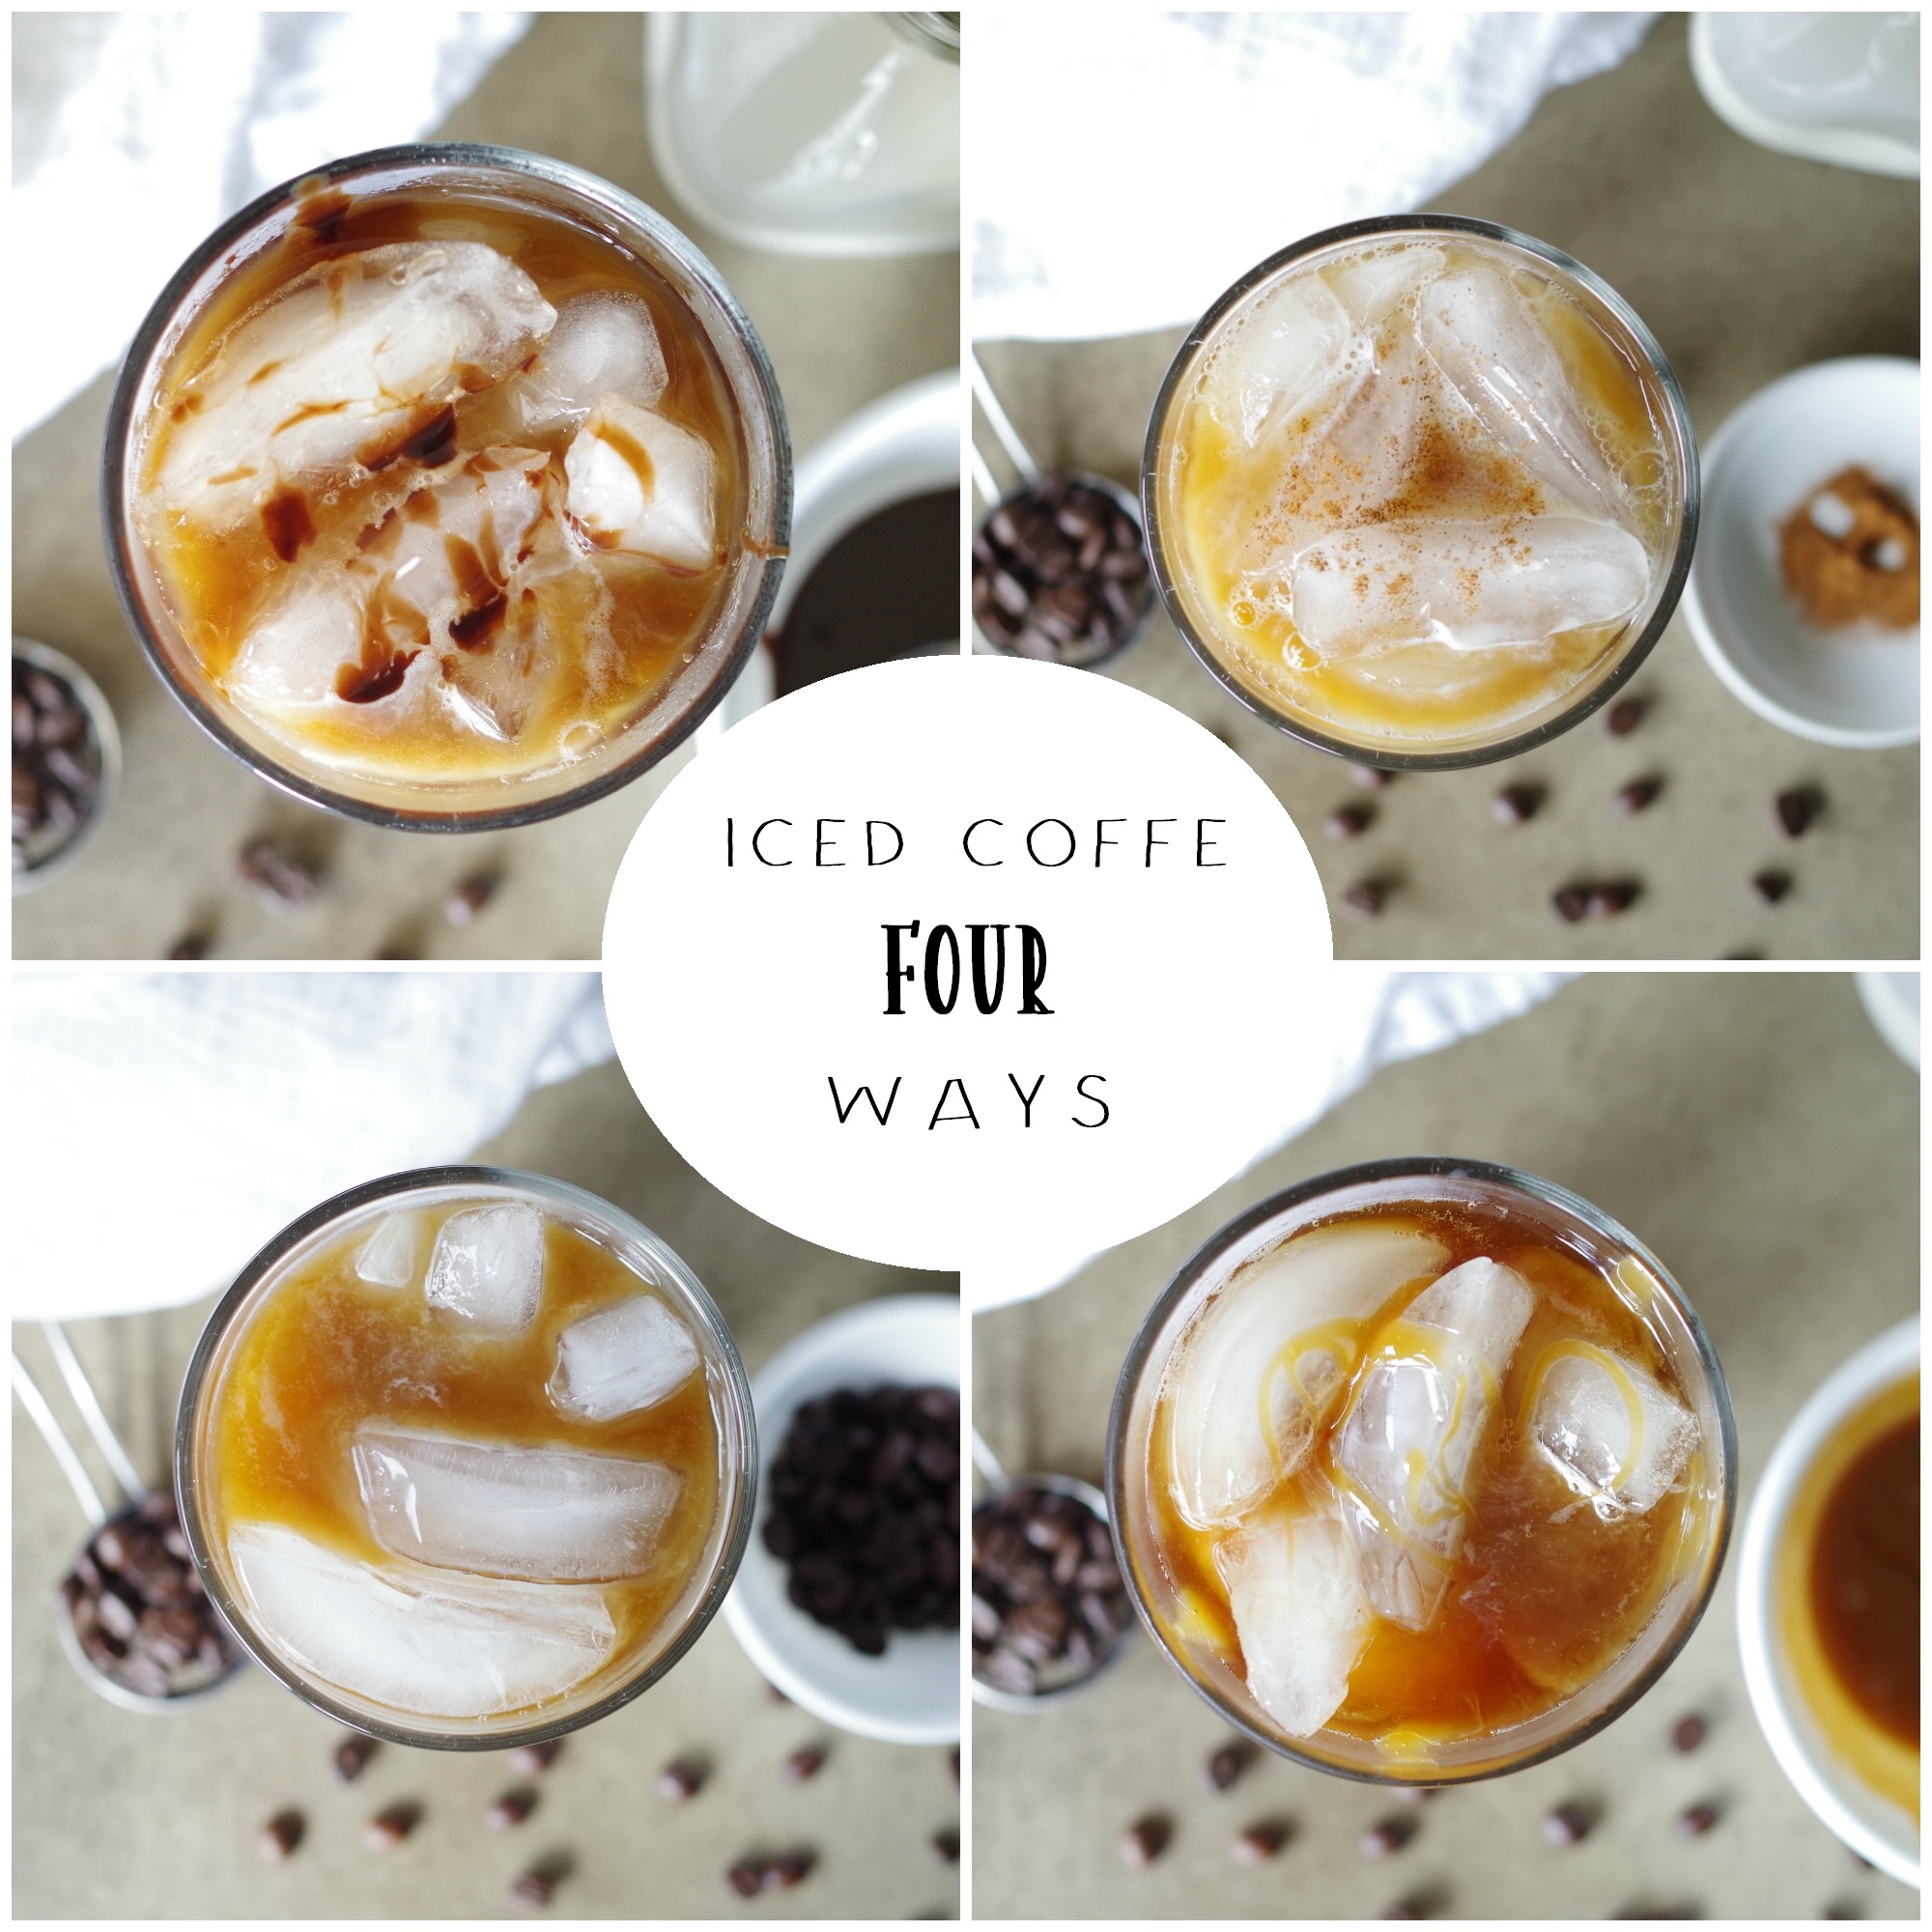 https://www.glutenfreepalate.com/wp-content/uploads/2017/06/Ice-Coffee-Four-Ways-Square-Collage1.jpg